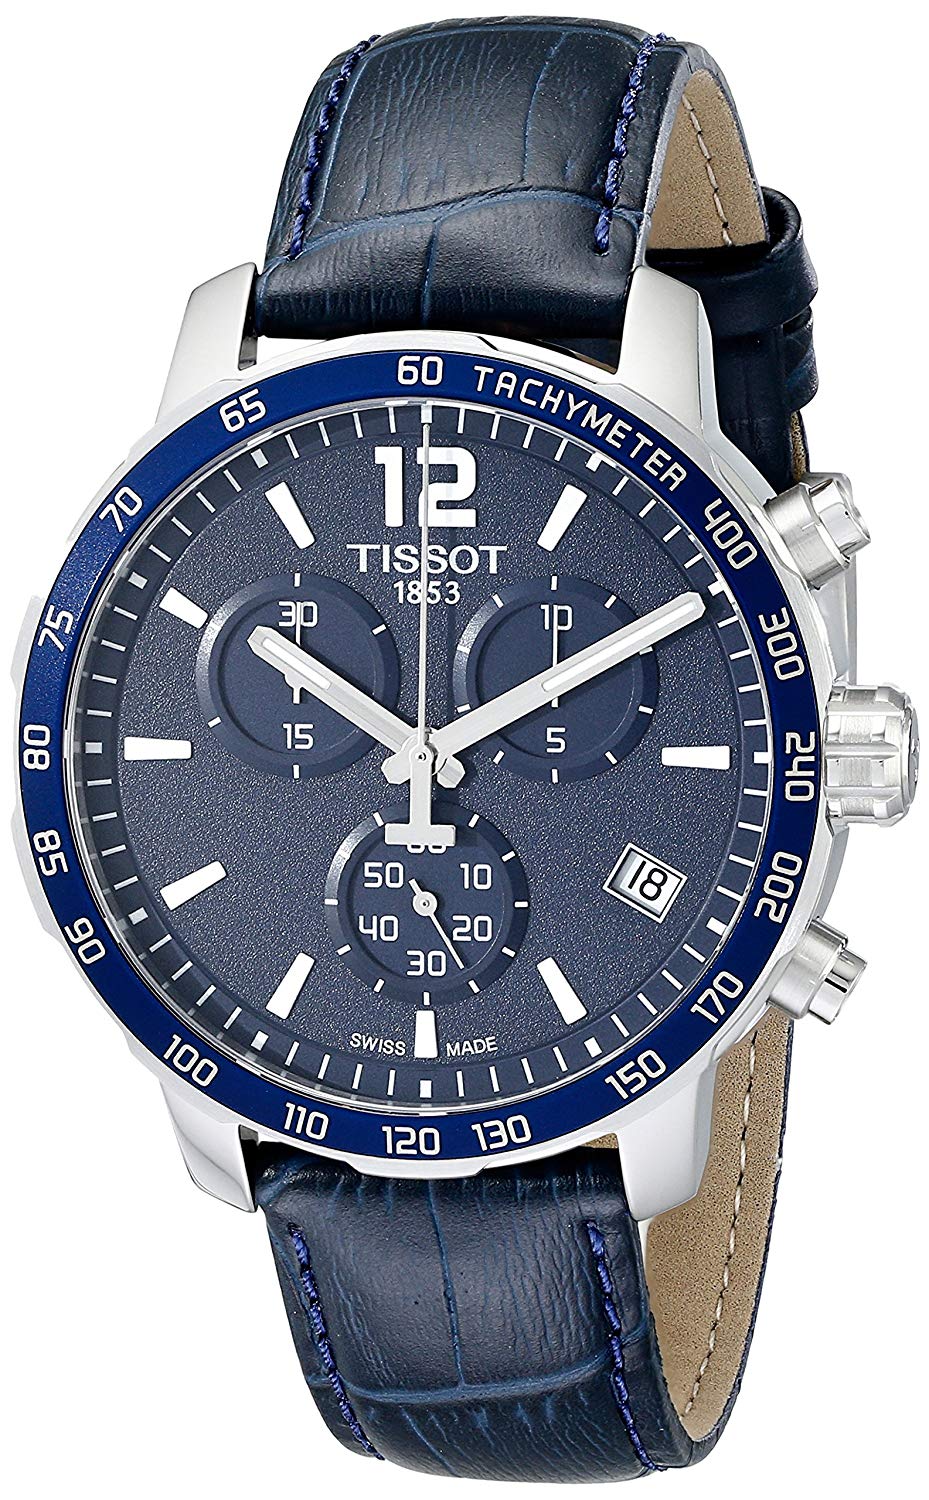 Tissot ساعة رجالية من الفولاذ المقاوم للصدأ كويكستر T0954171604700 بسوار اصطناعي أزرق